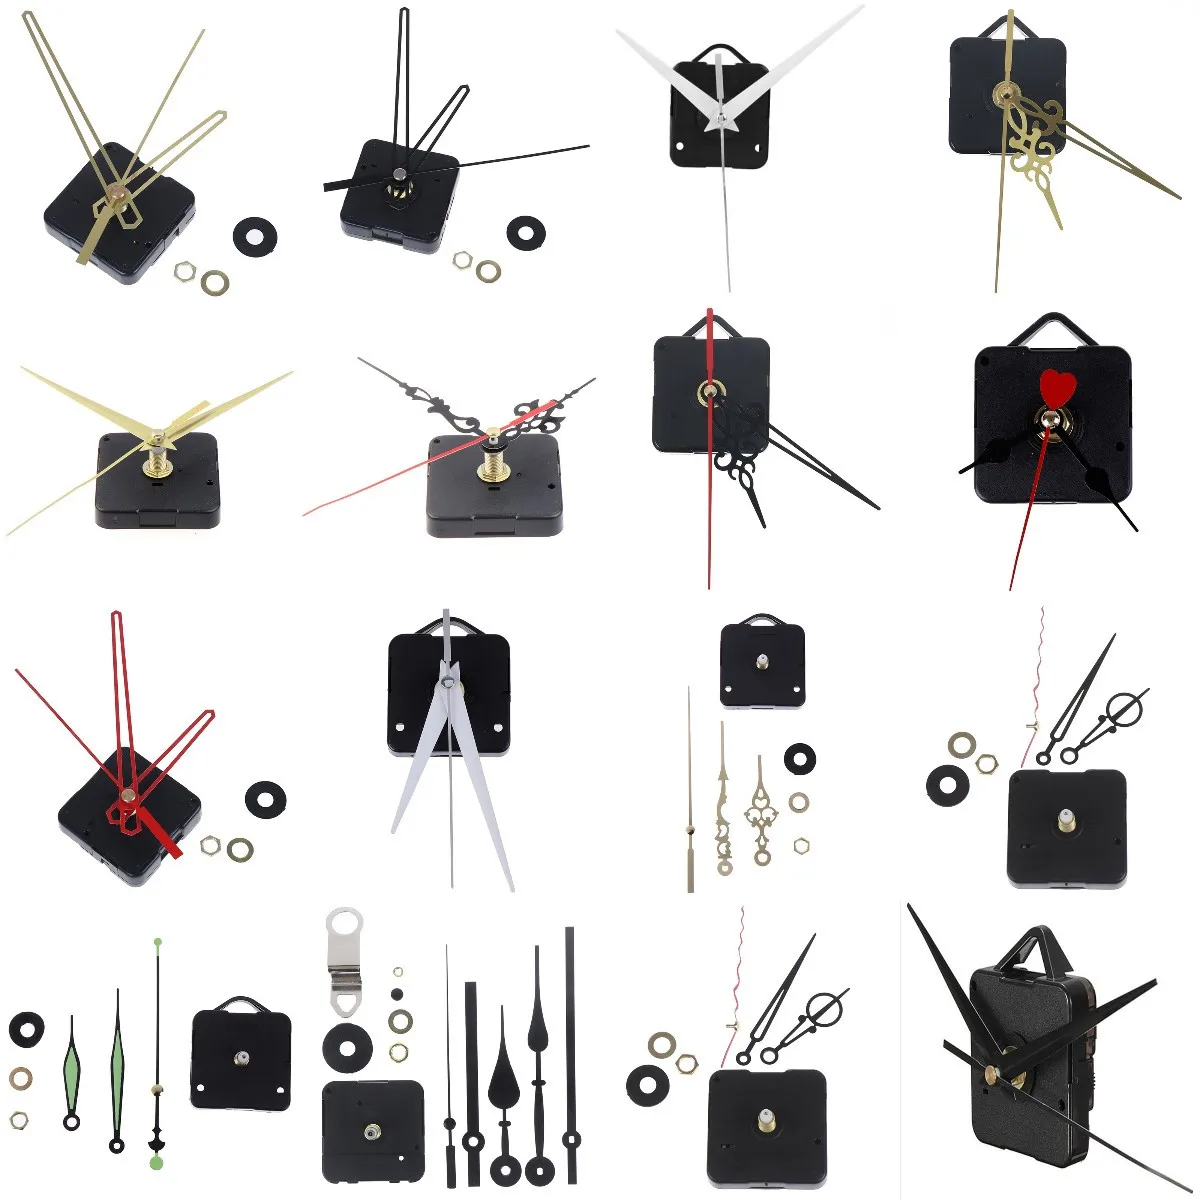 

50 Types Quartz Clock Repair Movement +Hands For DIY Silent Large Wall Clock Repair Clock Mechanism Parts